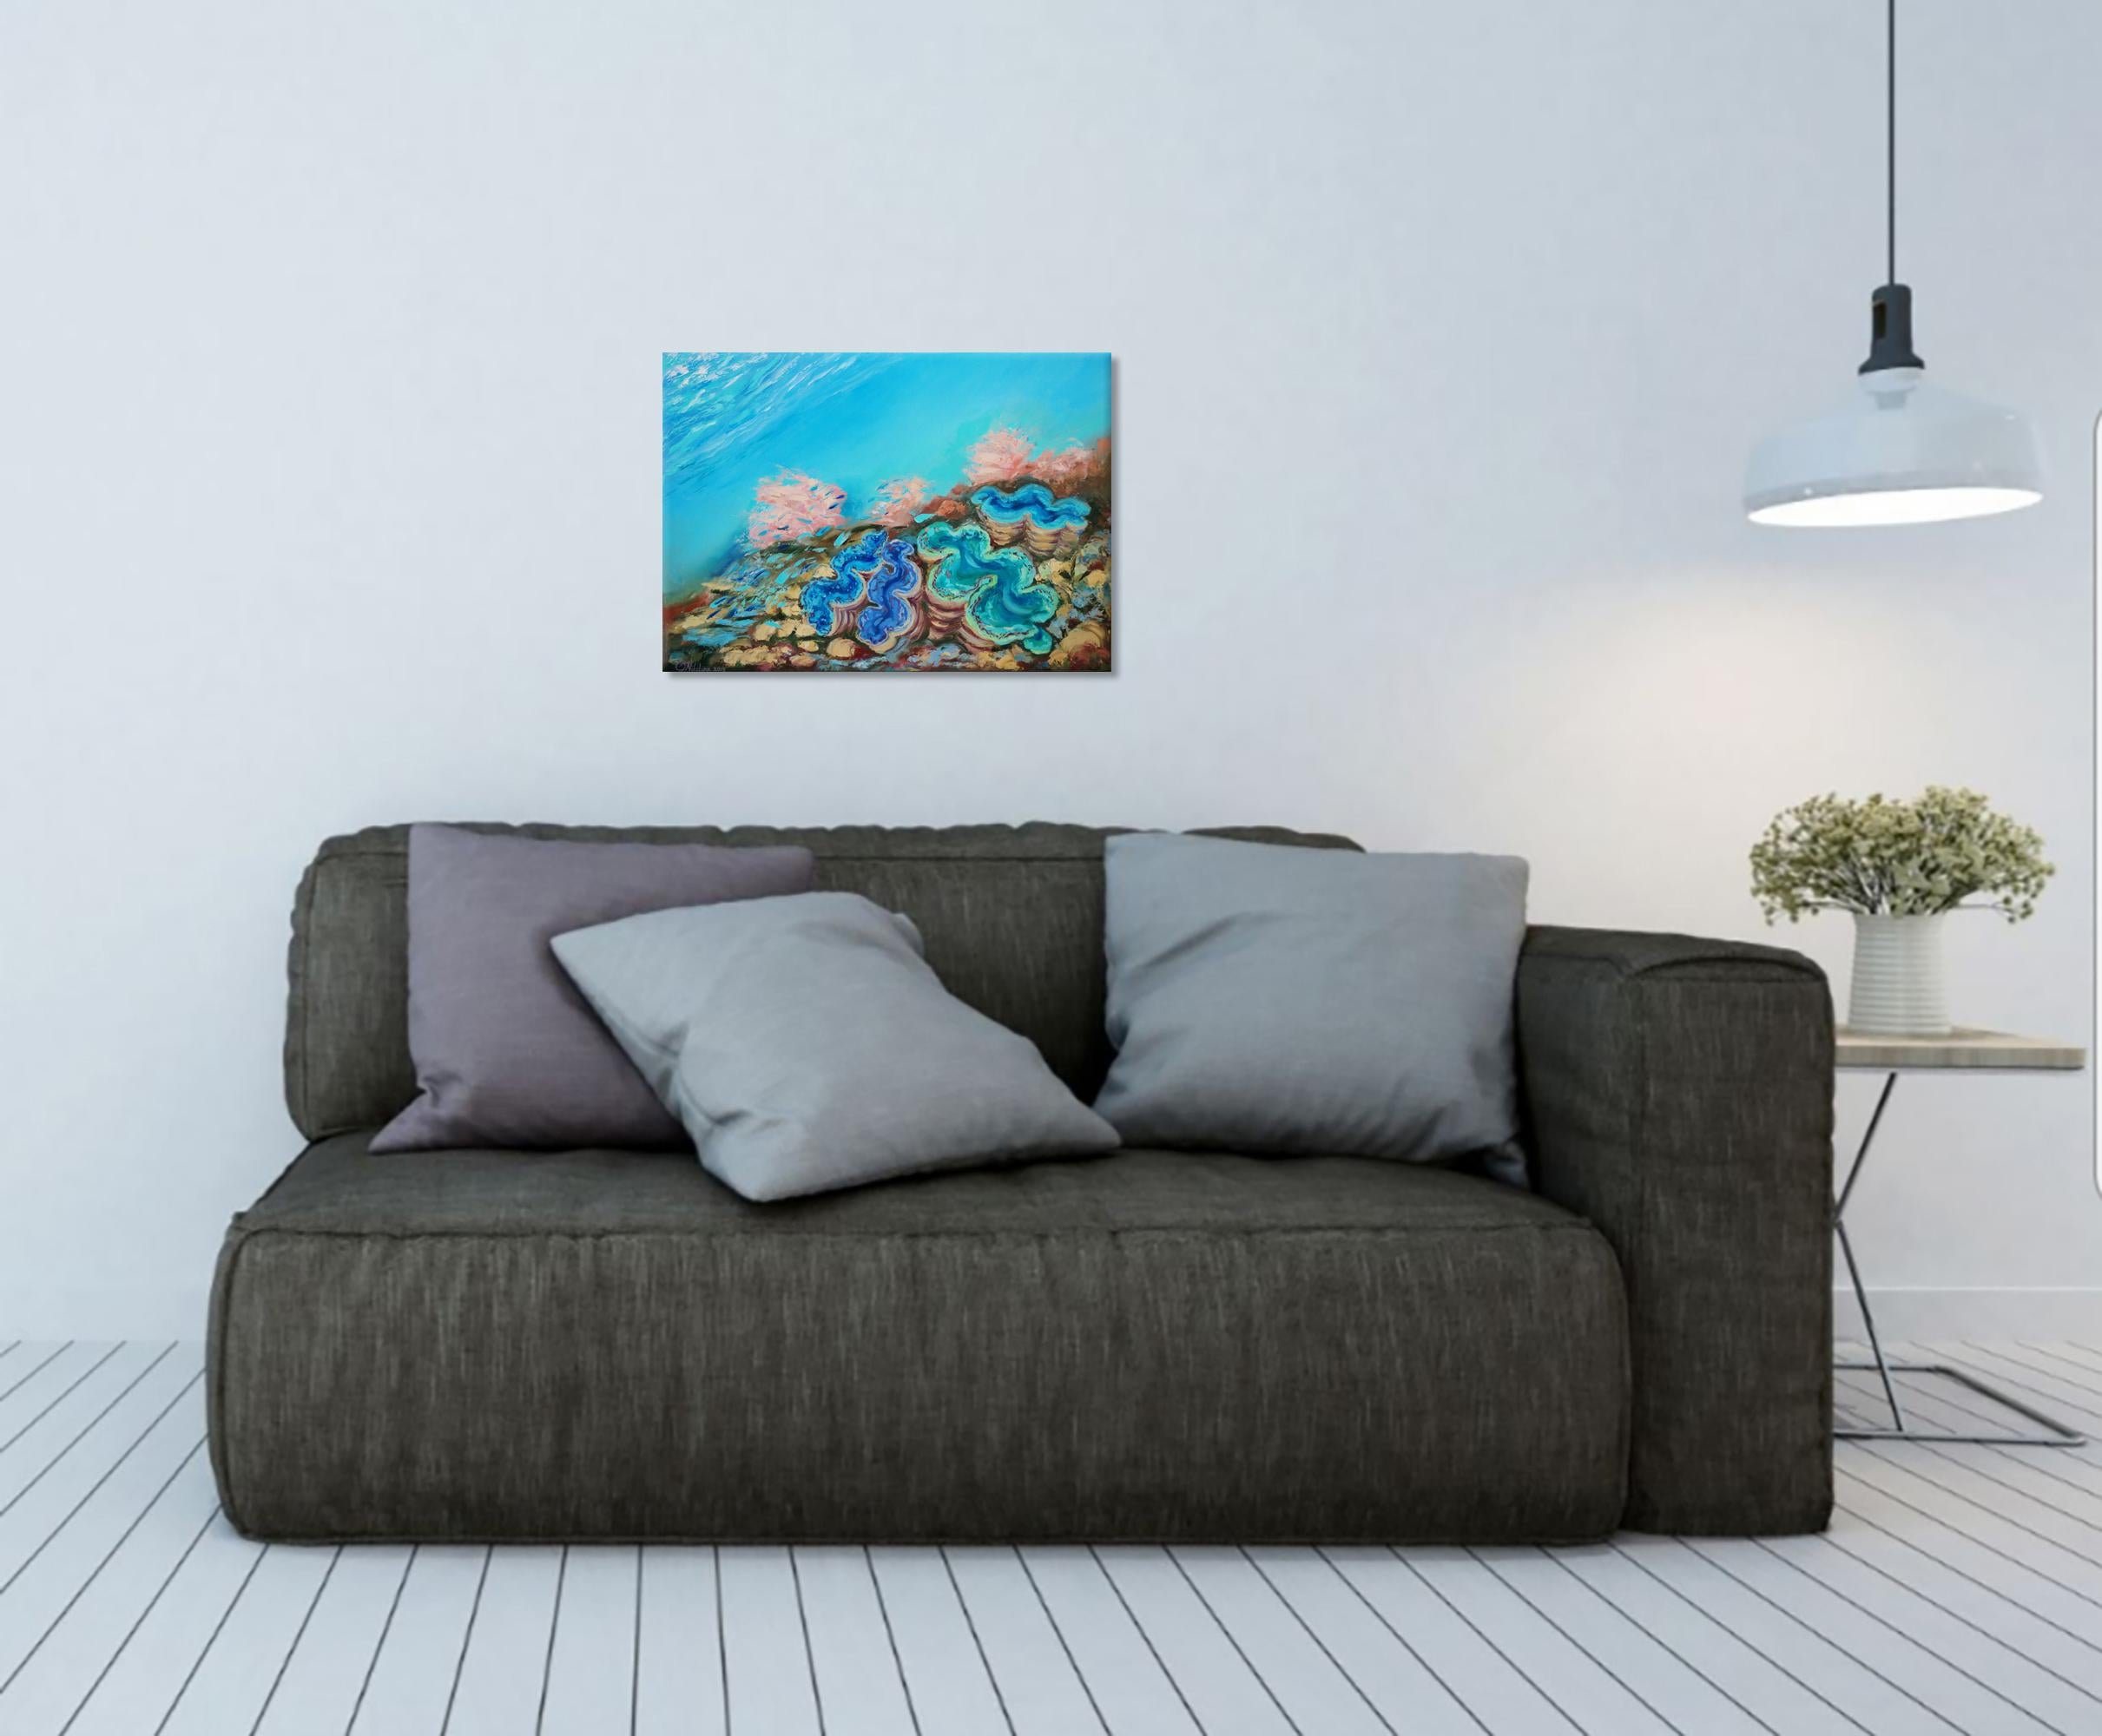 Original Coral Reef underwater painting by Olga Nikitina.
* Title: Coral Reef
* Size: 70x50 cm 28x20